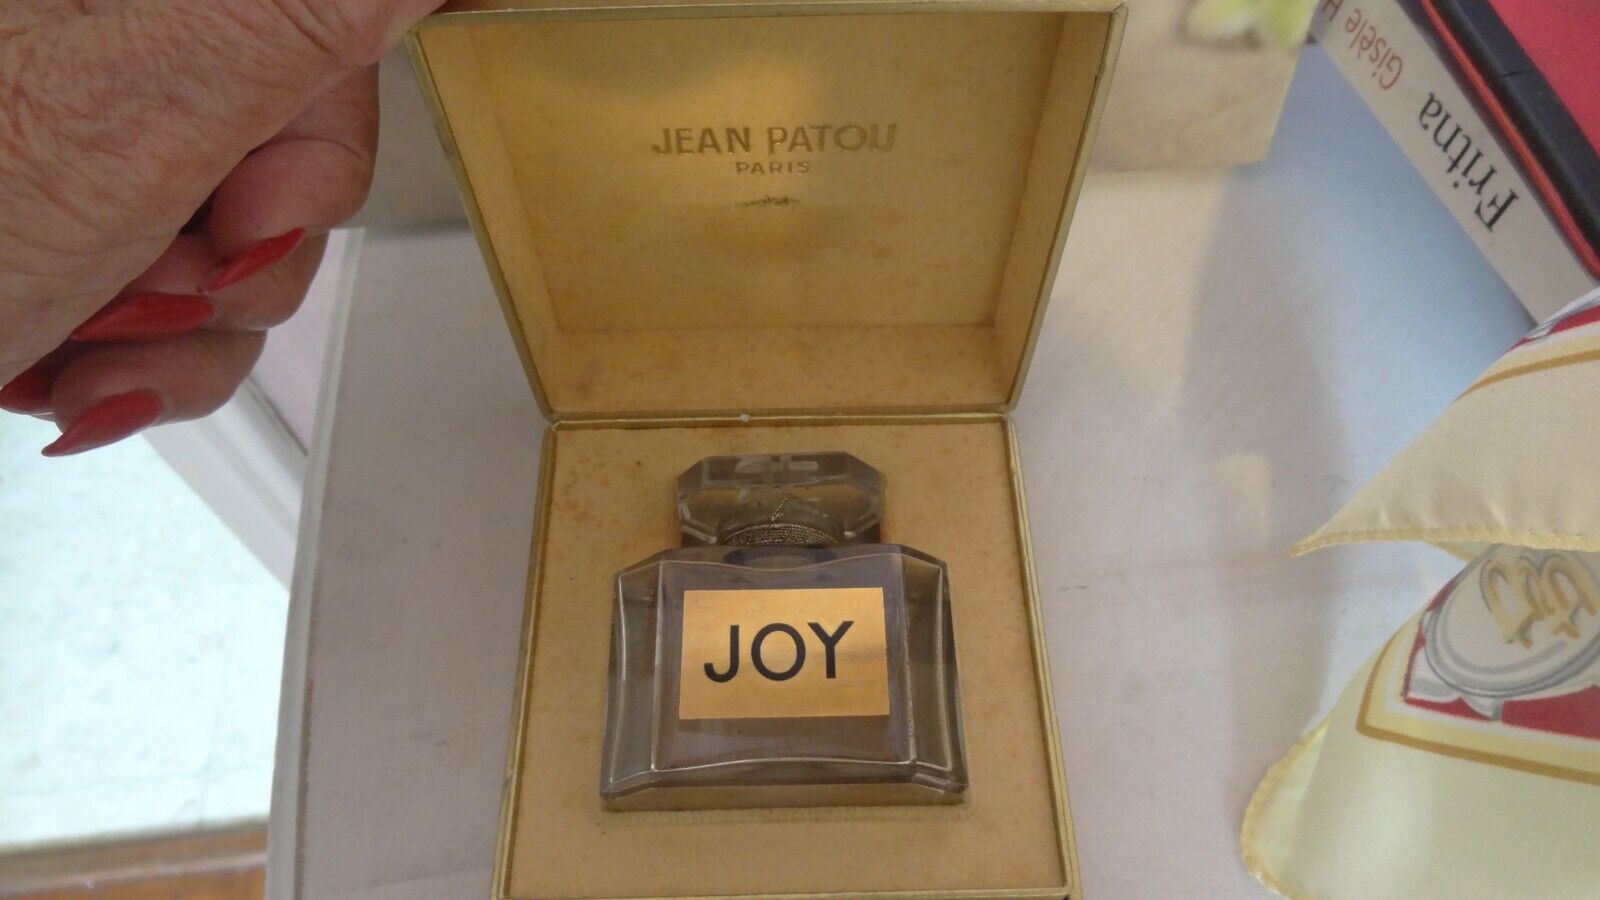 JEAN PATOU - JOY - OLD perfume bottle CRYSTAL BACCARAT